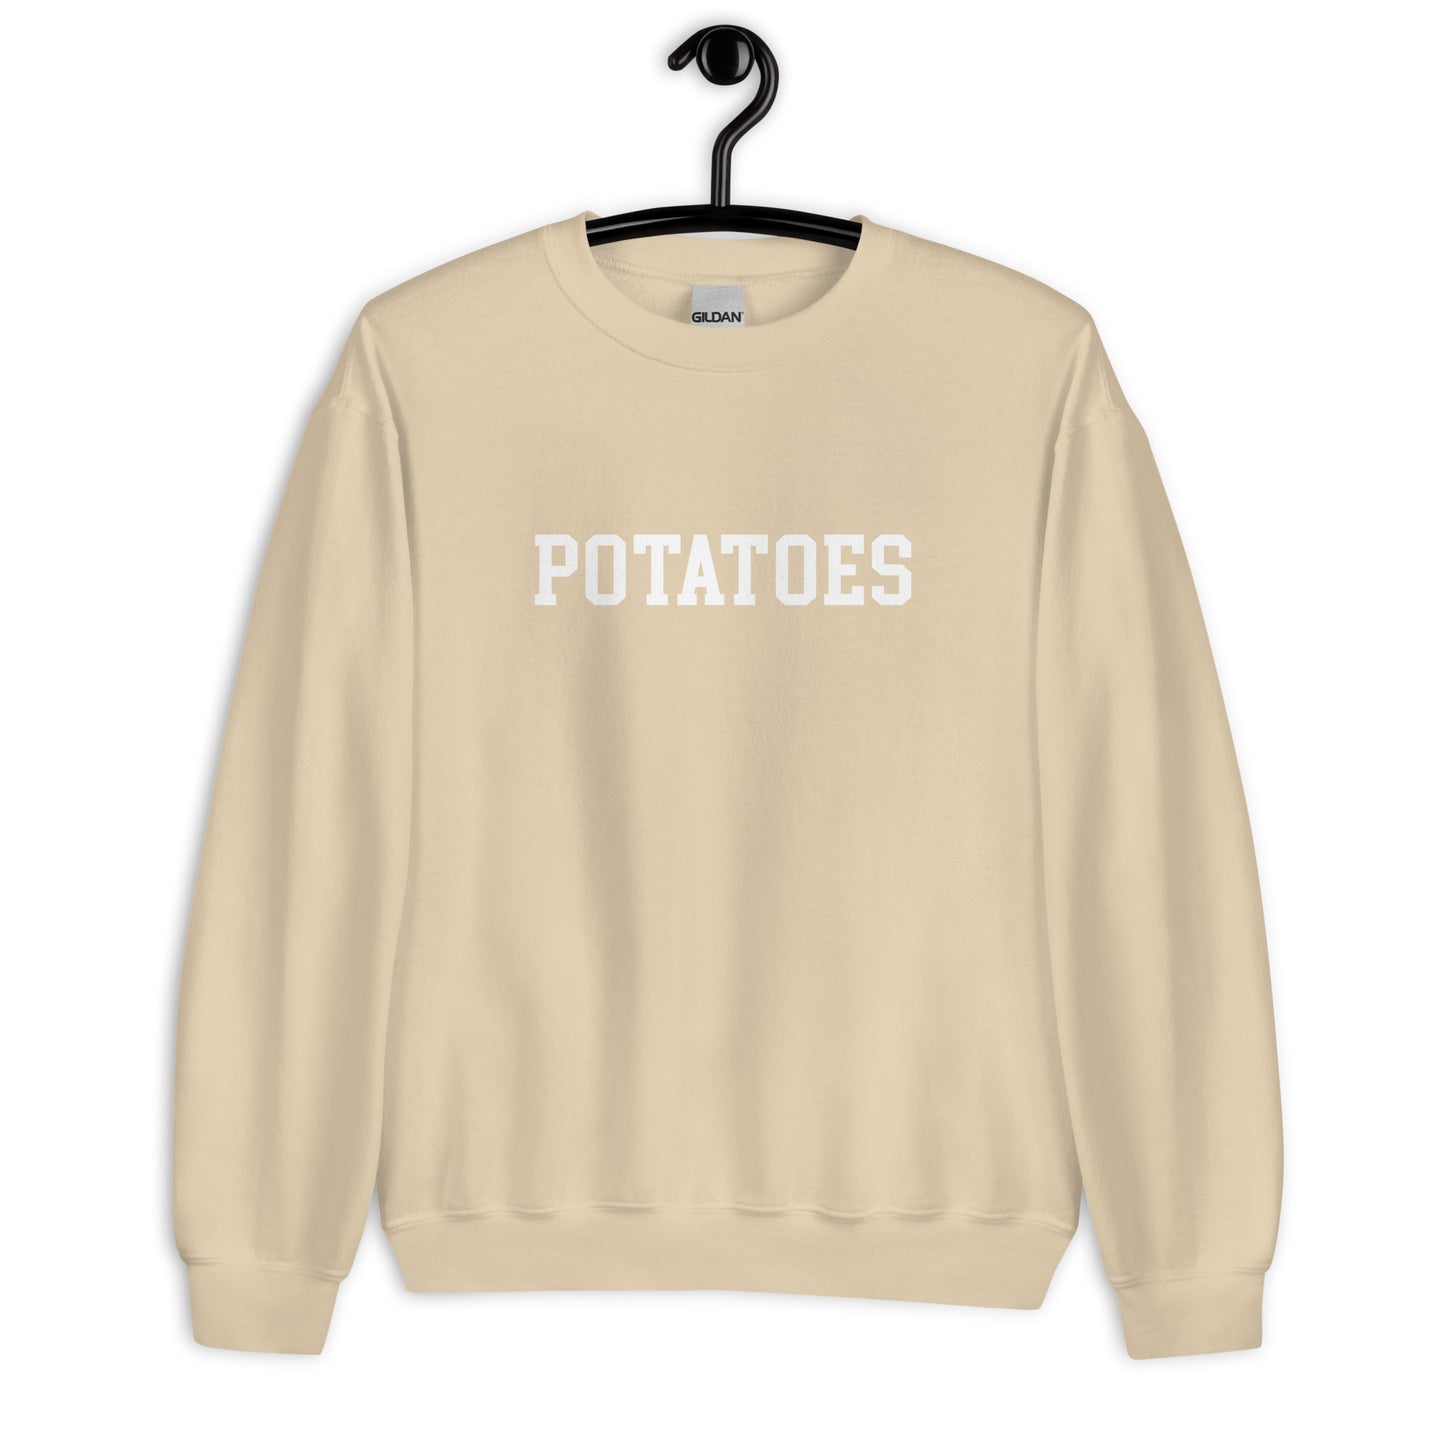 Potatoes Sweatshirt - Straight Font